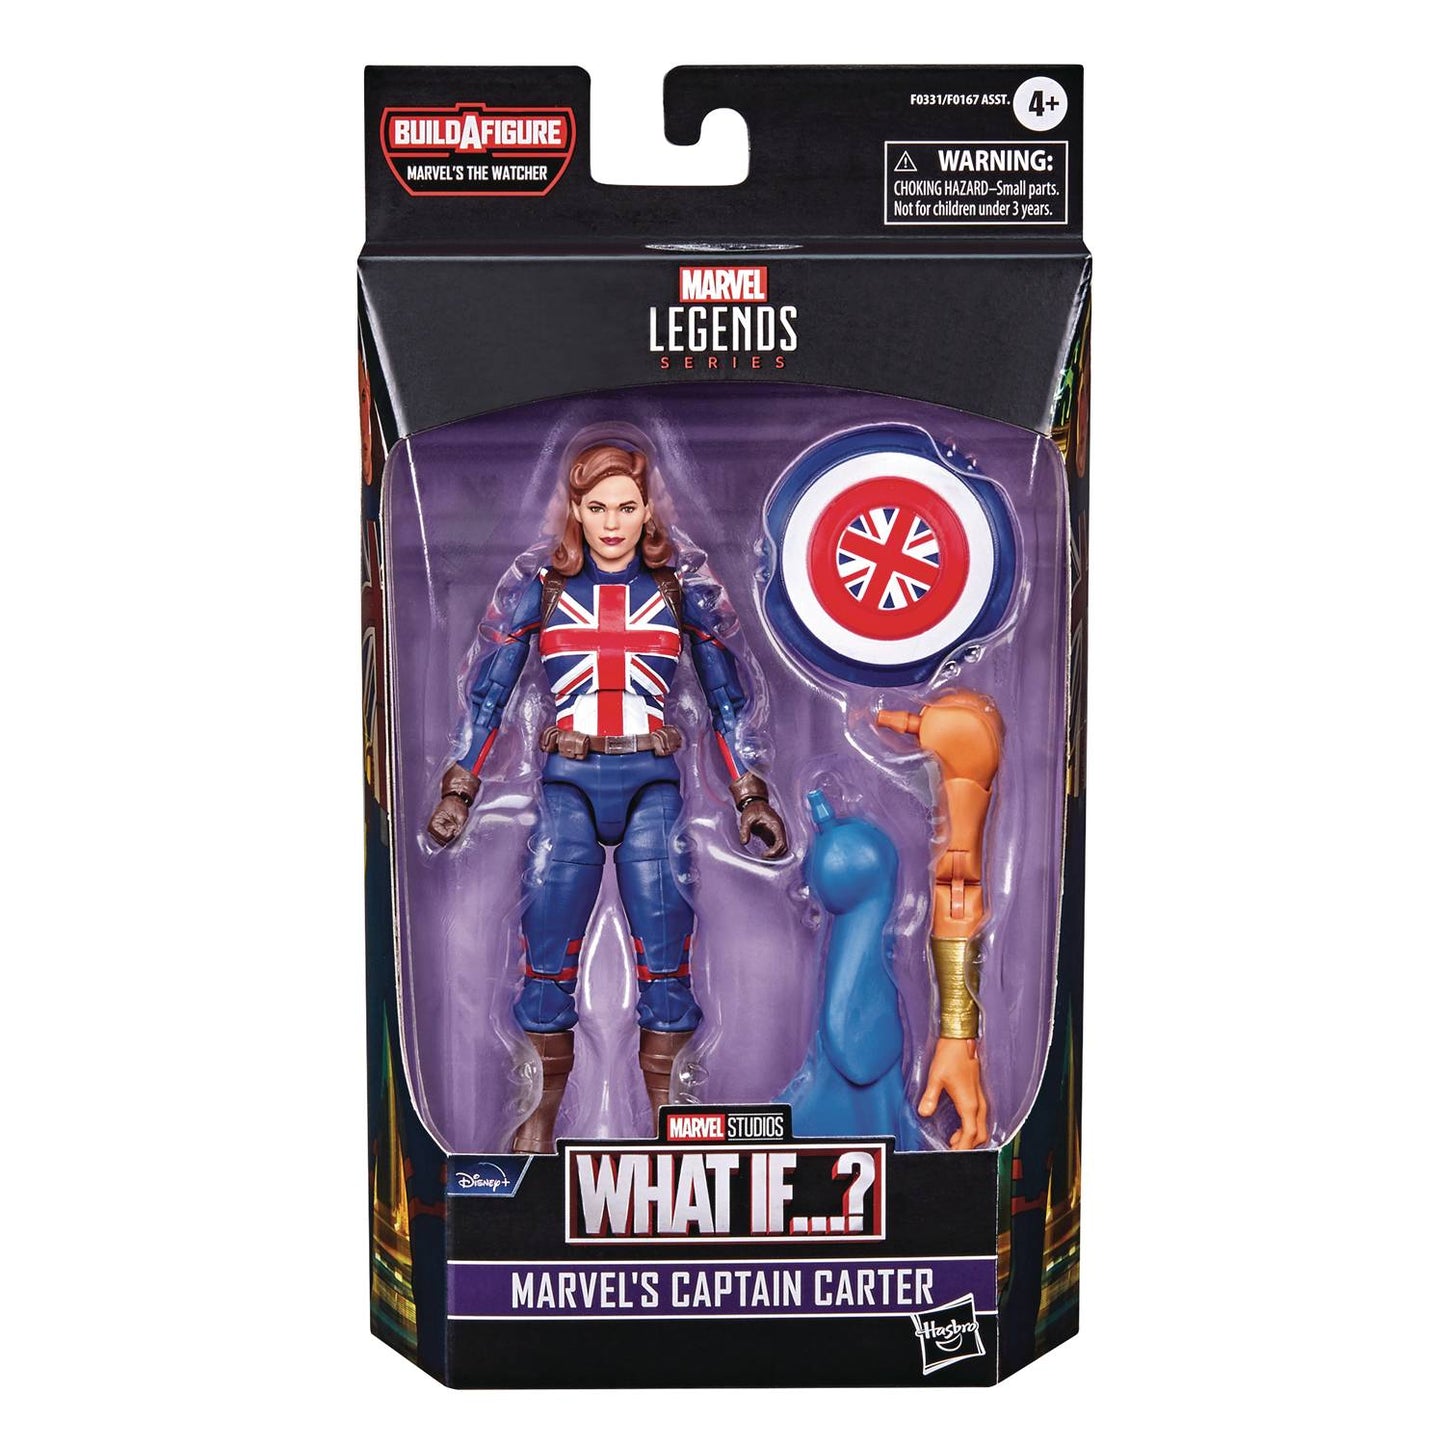 Marvel Legends Captain Carter Action Figure by Hasbro